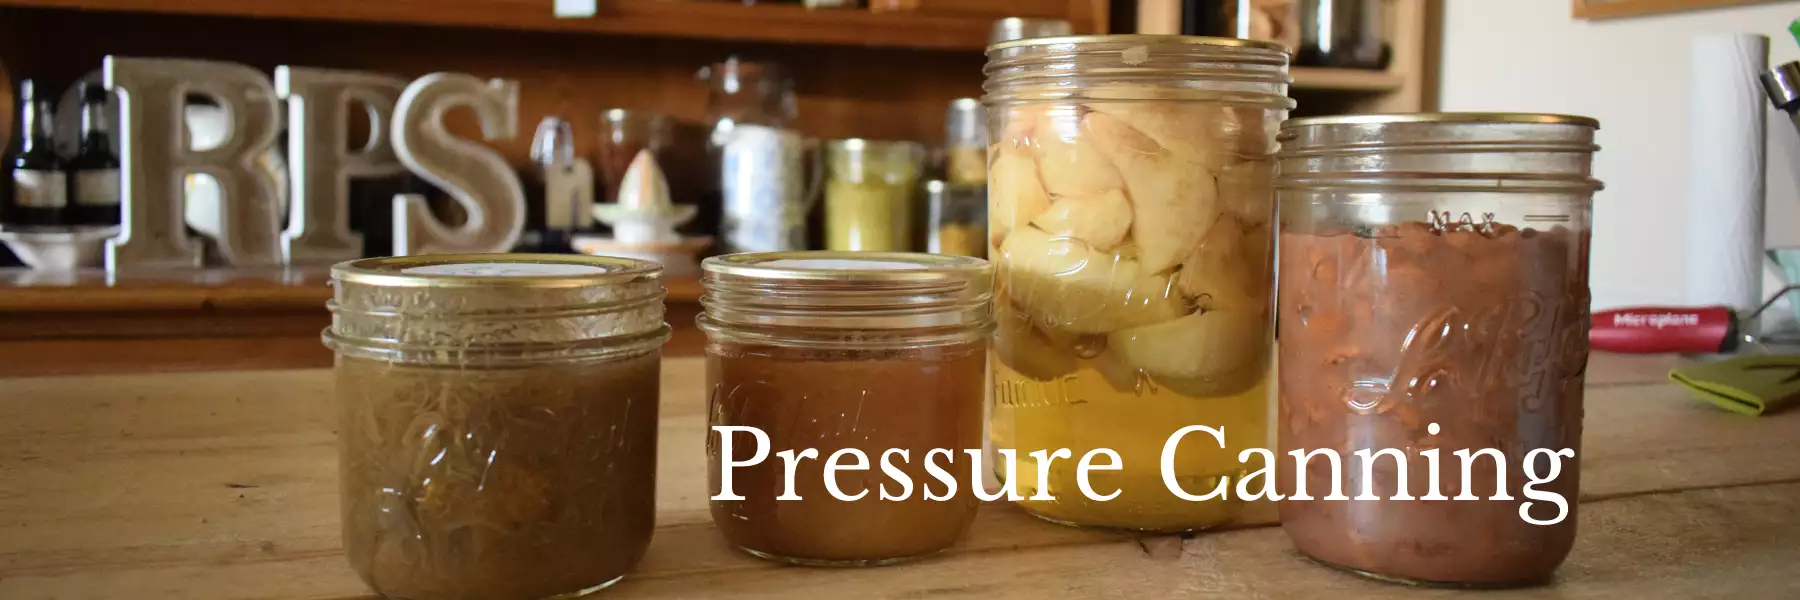 Pressure Canning